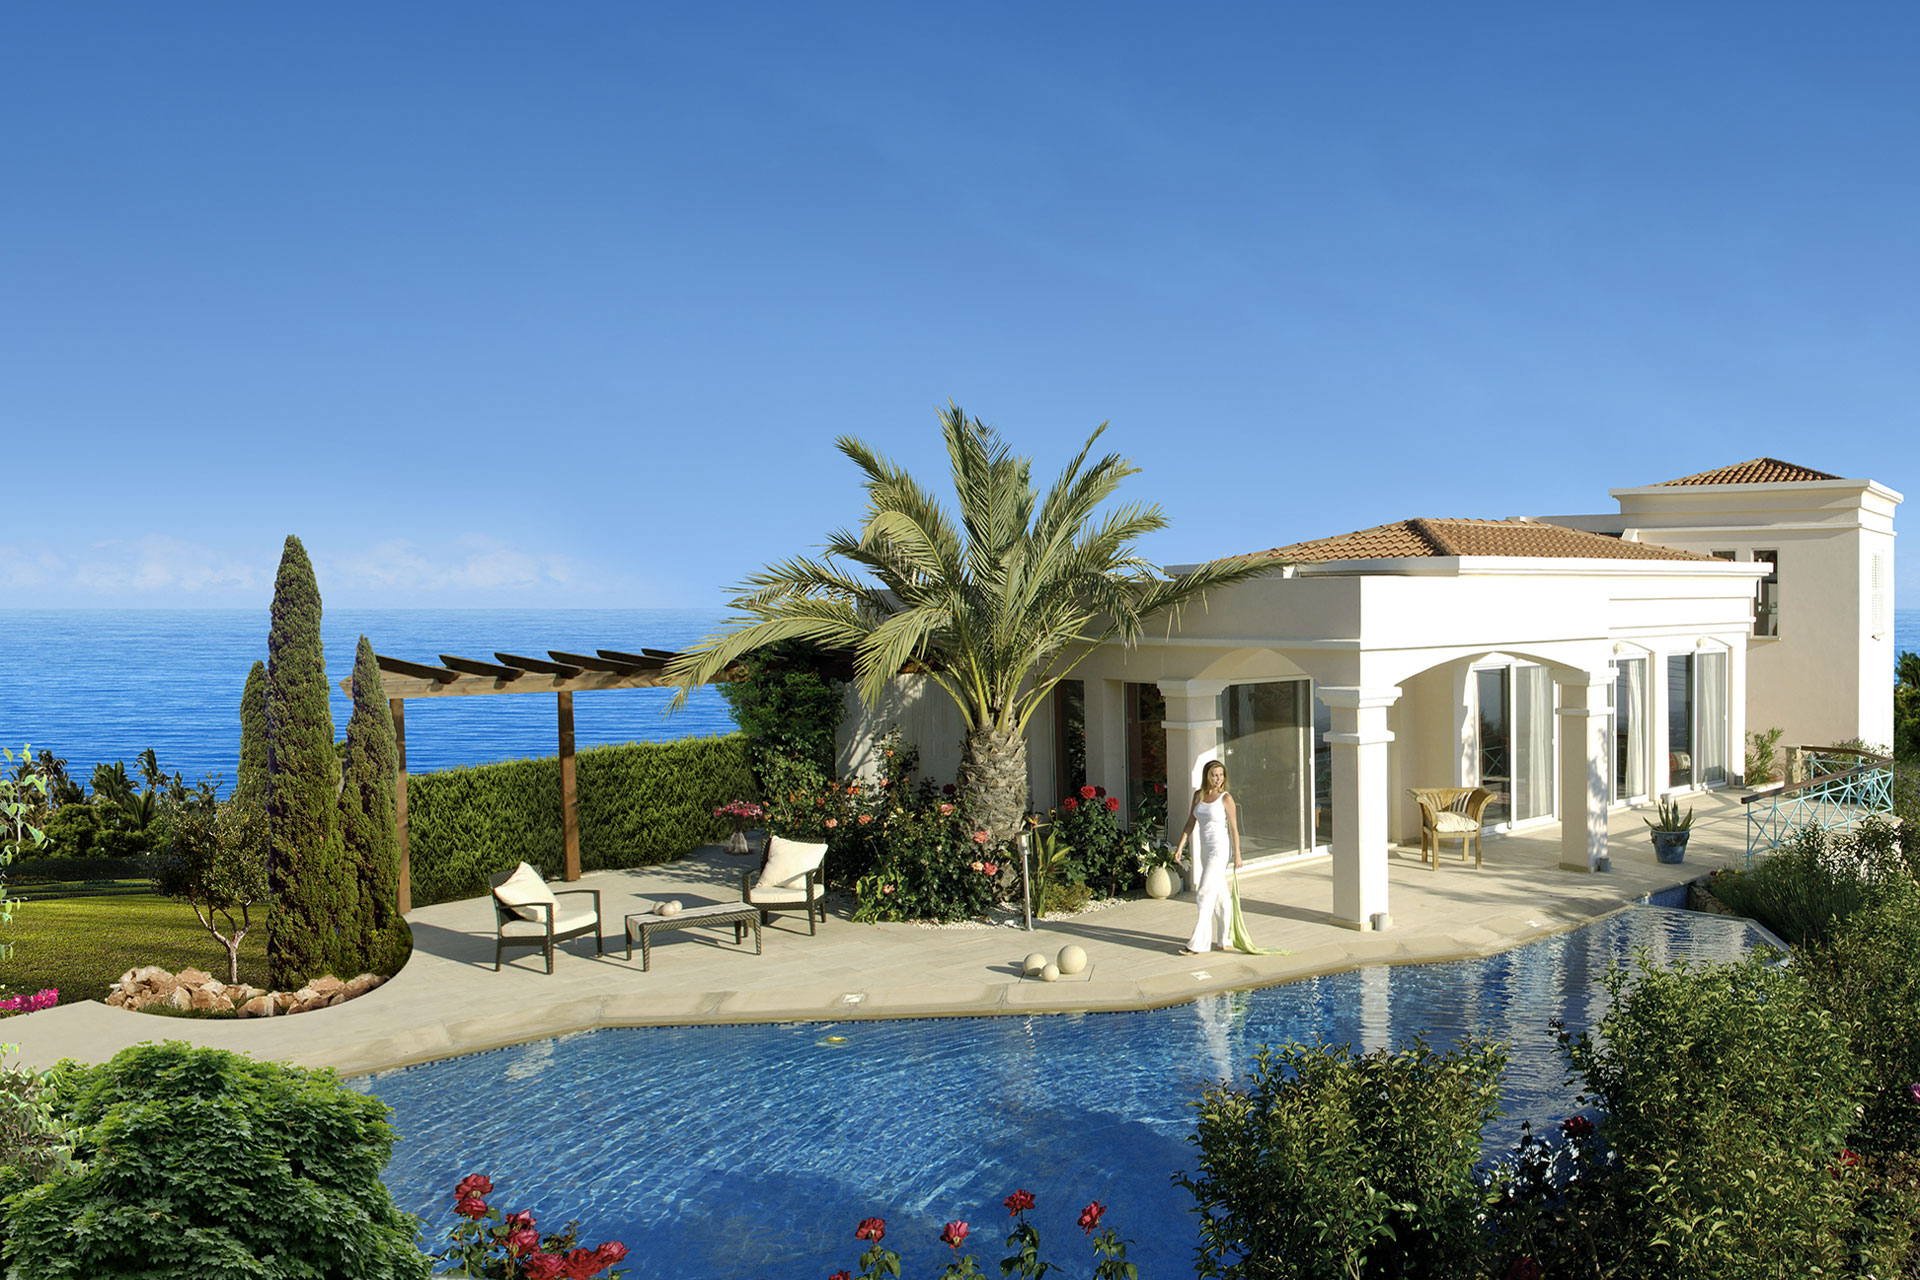 Cyprus villa with coastal views and an infinity pool.